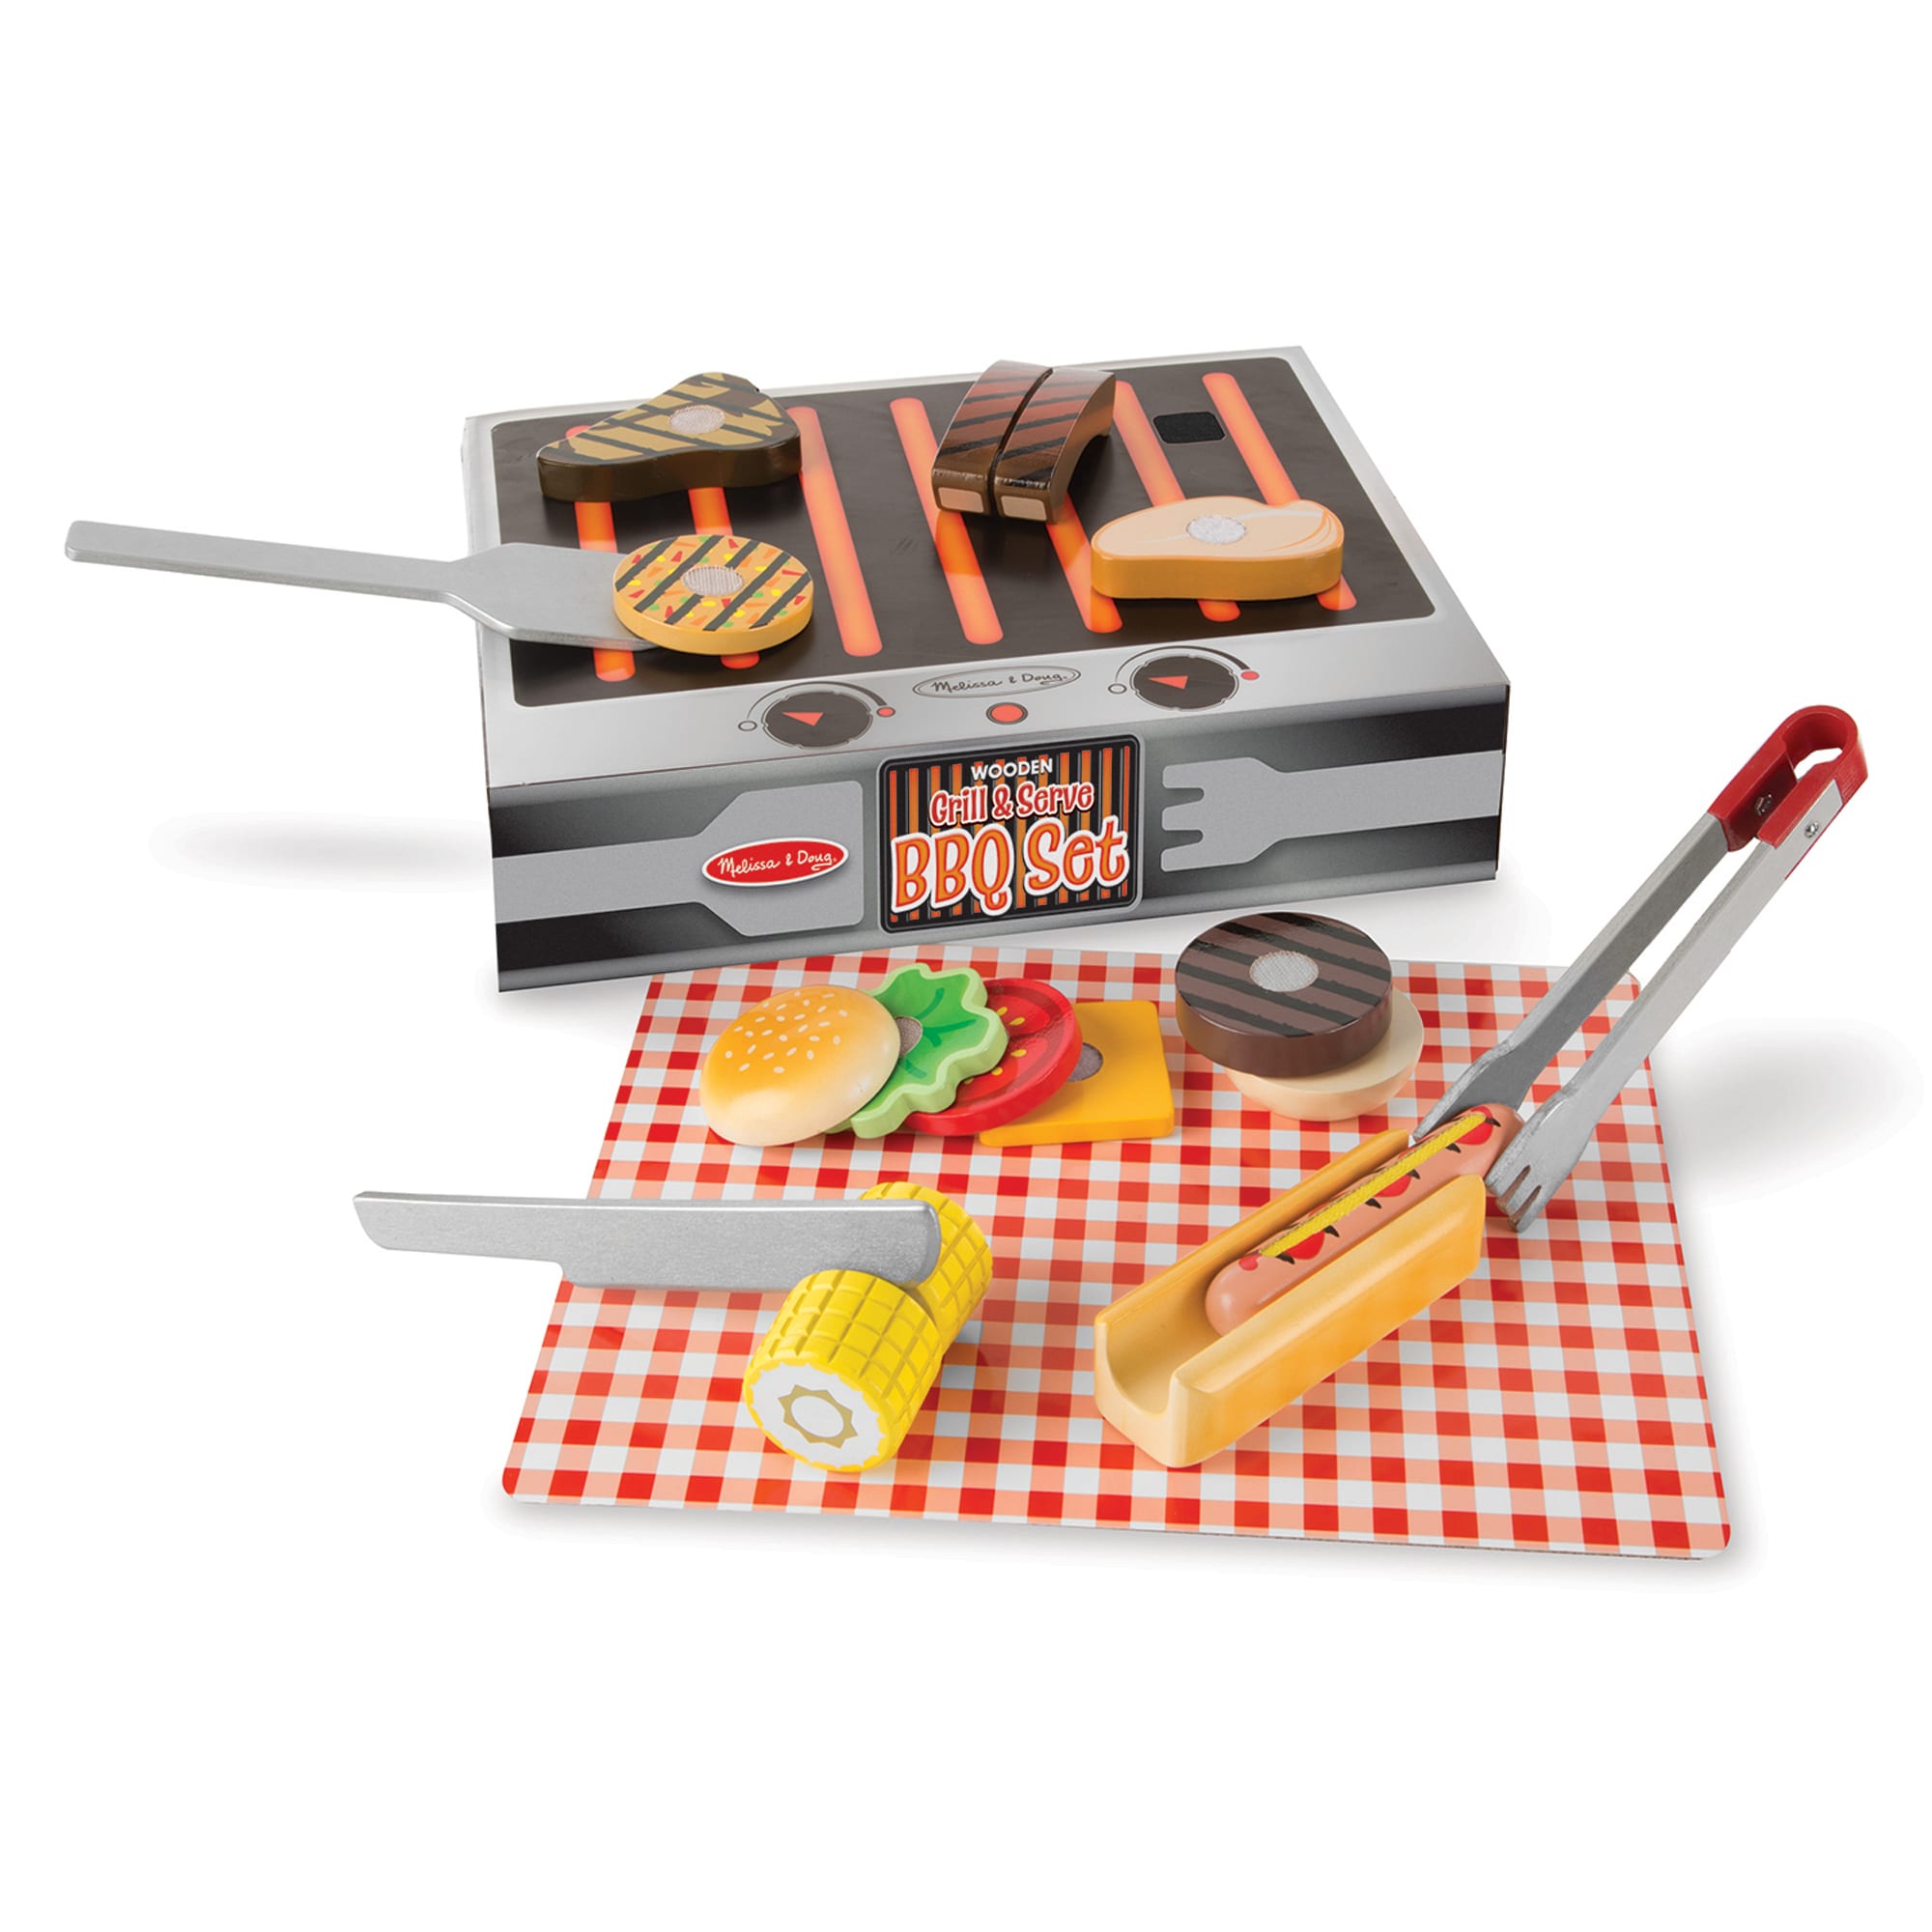 Melissa & Doug Top & Bake Wooden Pizza Counter Play Set (41 Pcs) -  FSC-Certified Materials